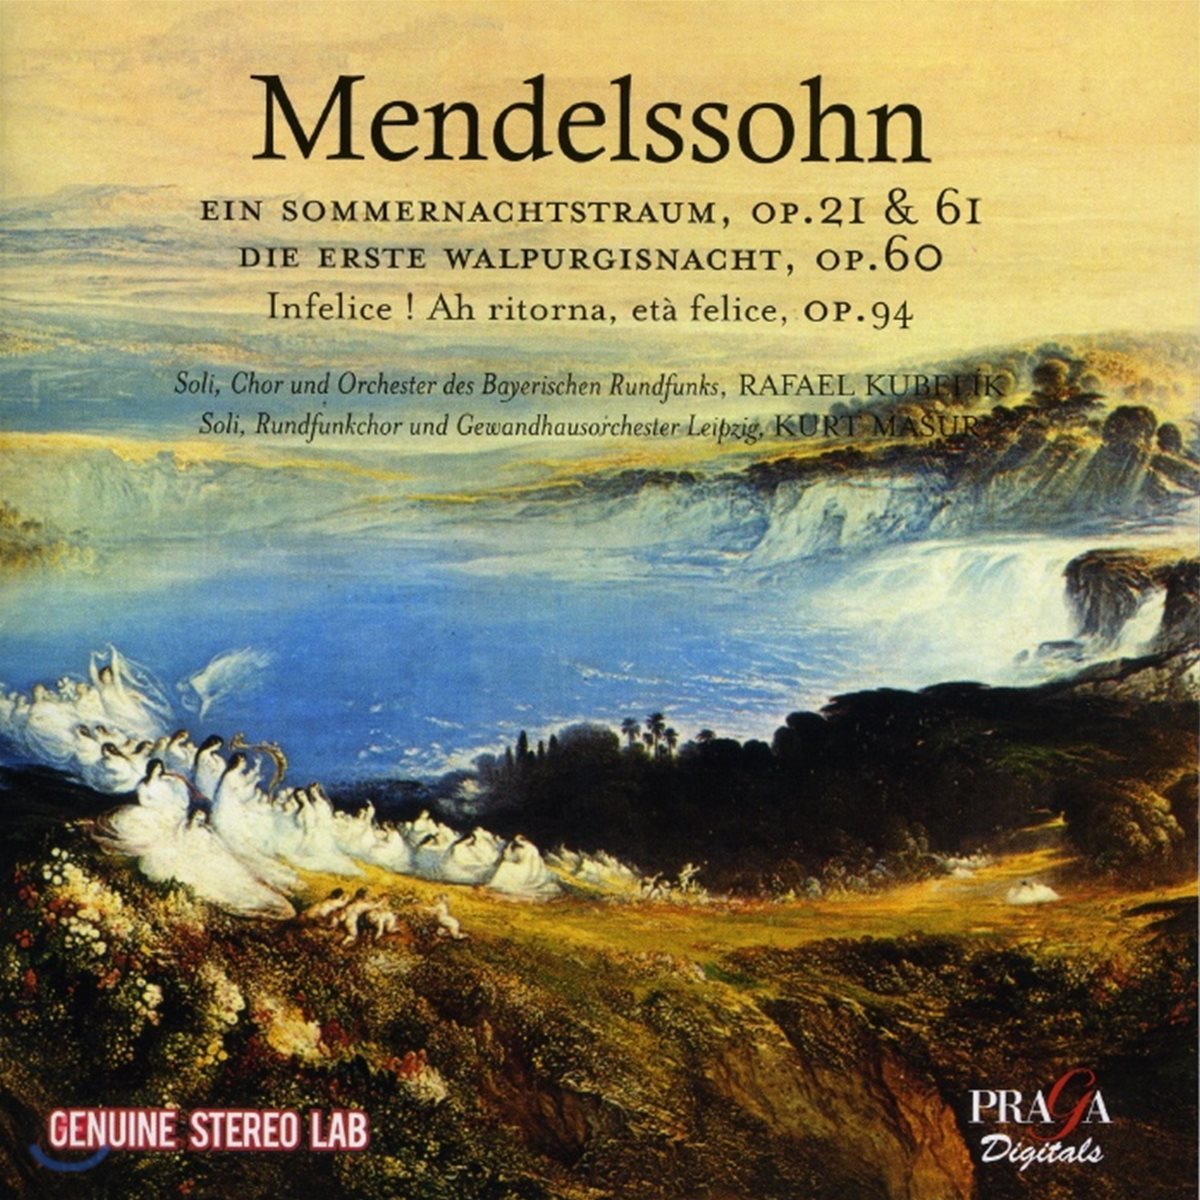 Rafael Kubelik / Kurt Masur 멘델스존: 한여름 밤의 꿈, 첫번째 발푸르기스의 밤 Op. 60 (Mendelssohn: Ein Sommernachtstraum, Op. 21 &amp; 61, Die Erste Walpurgisnacht, Op. 60)